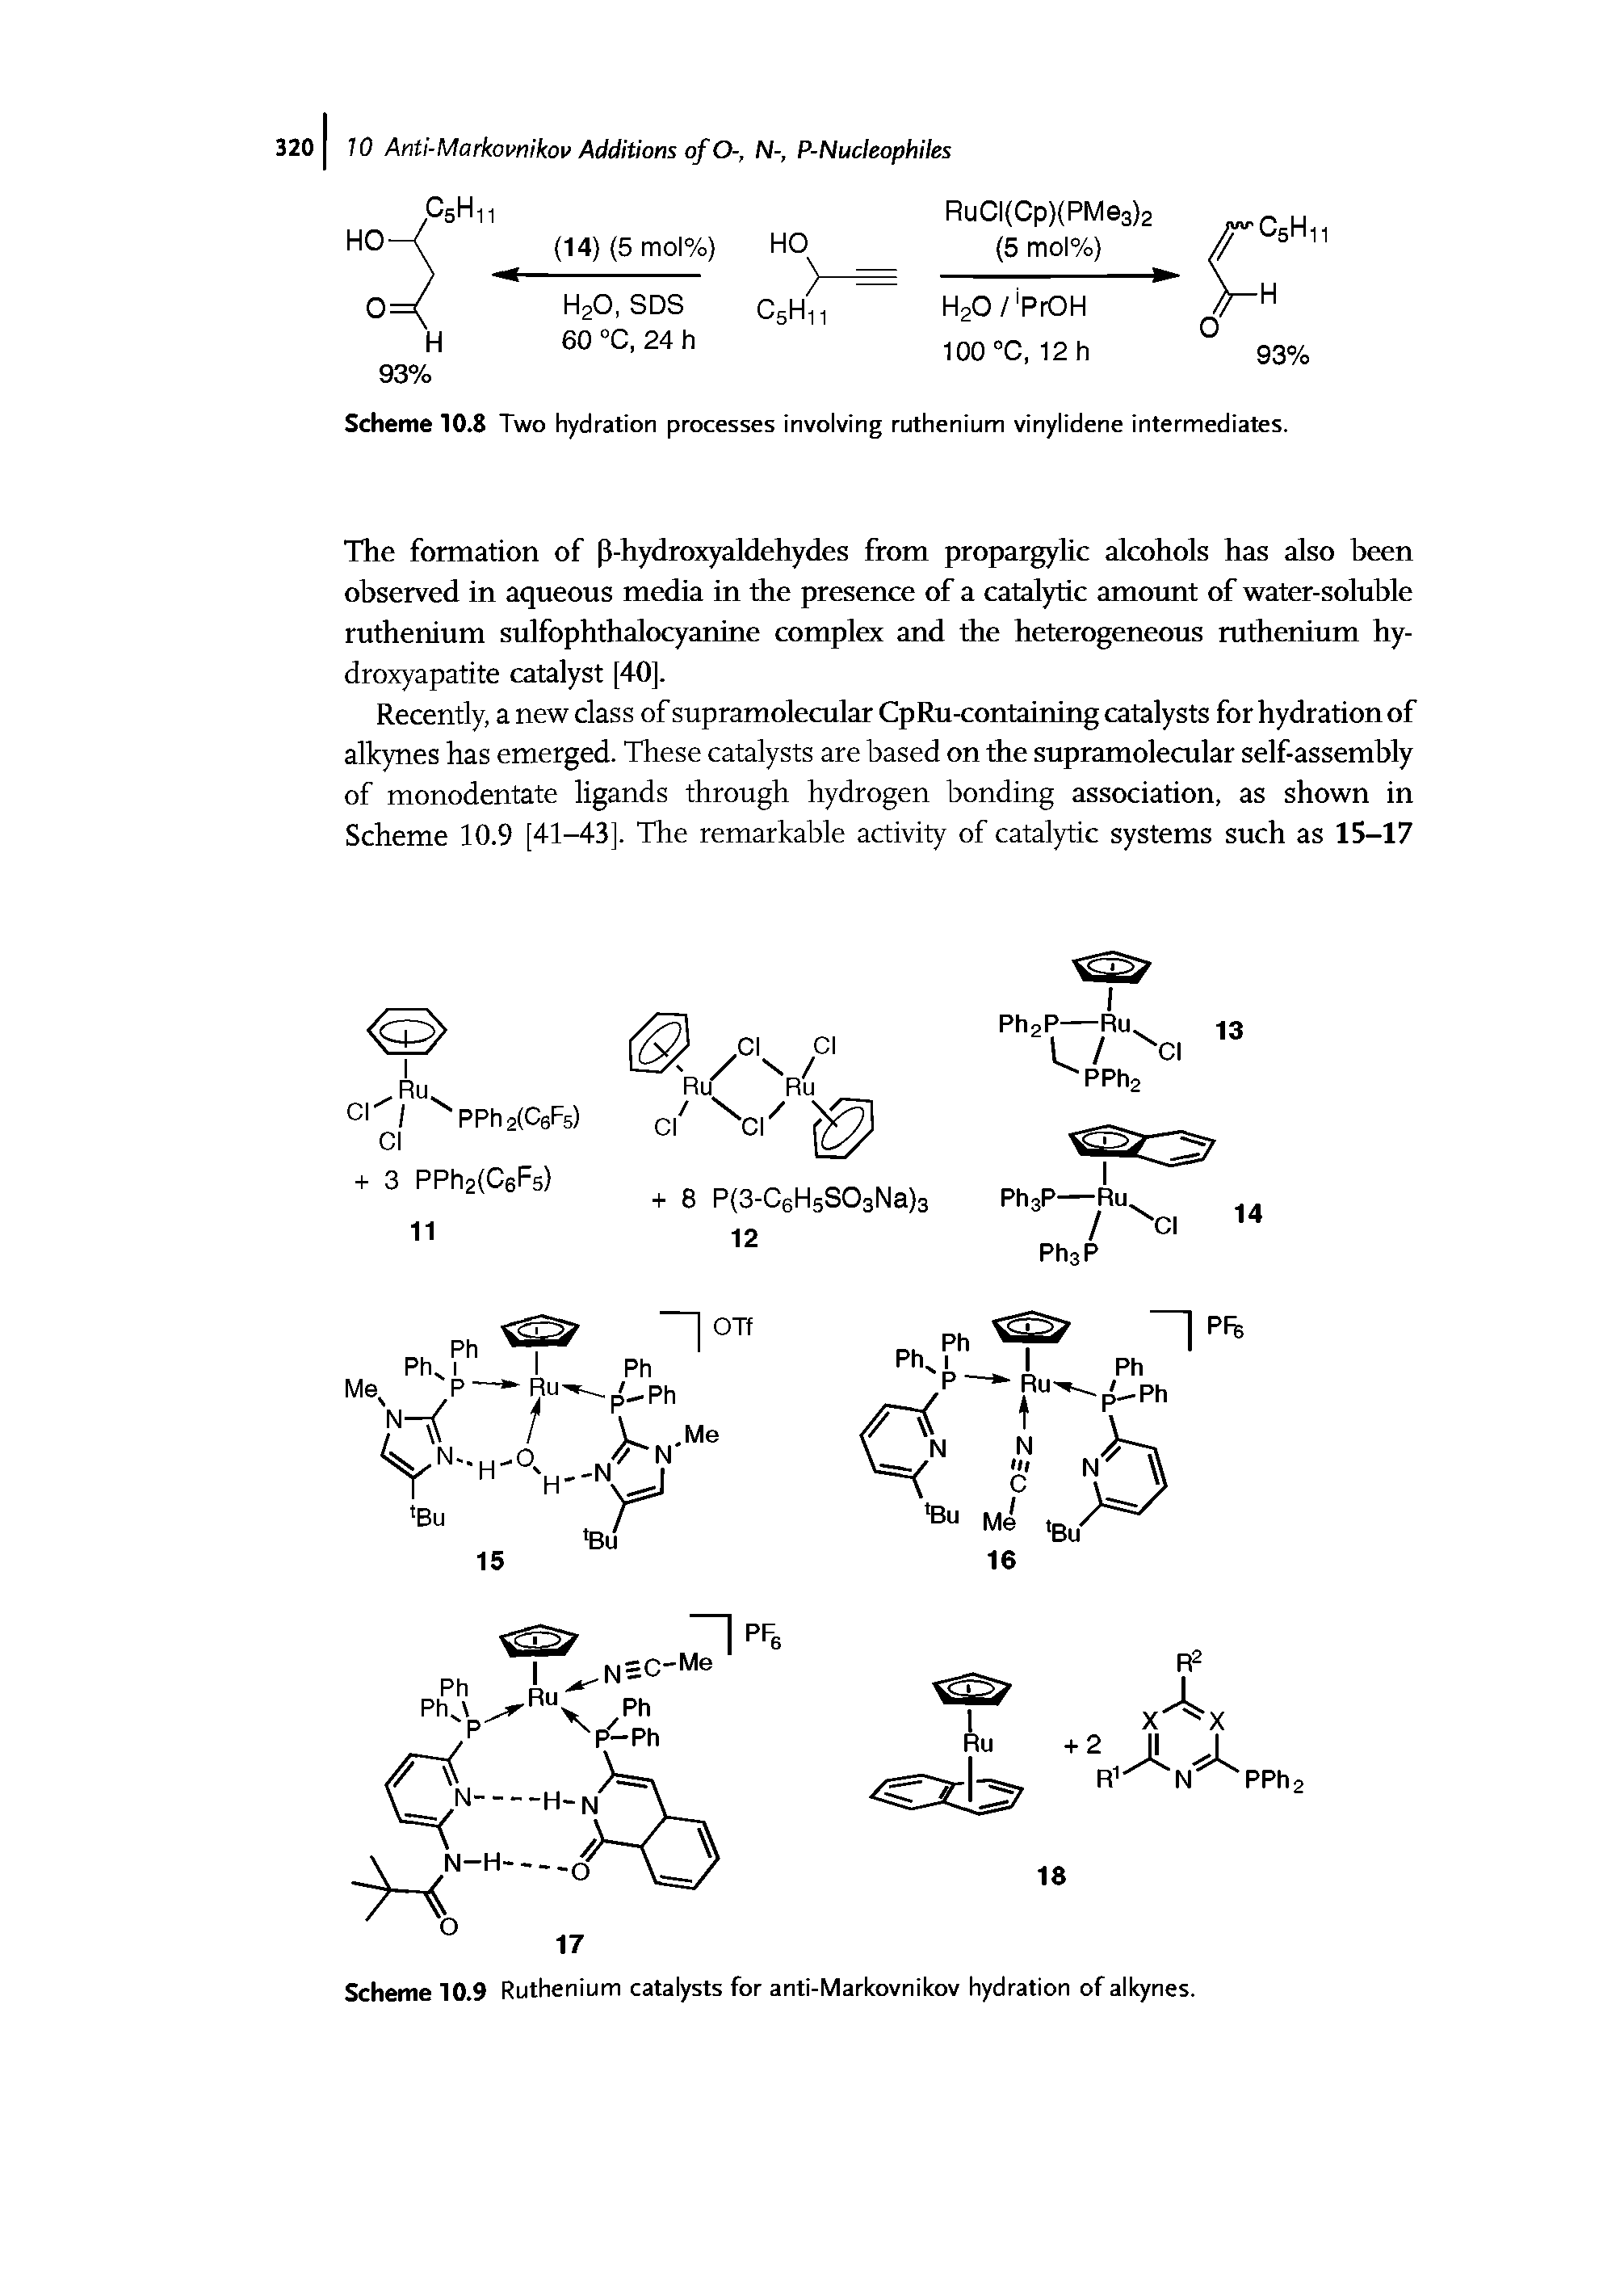 Scheme 10.8 Two hydration processes involving ruthenium vinylidene intermediates.